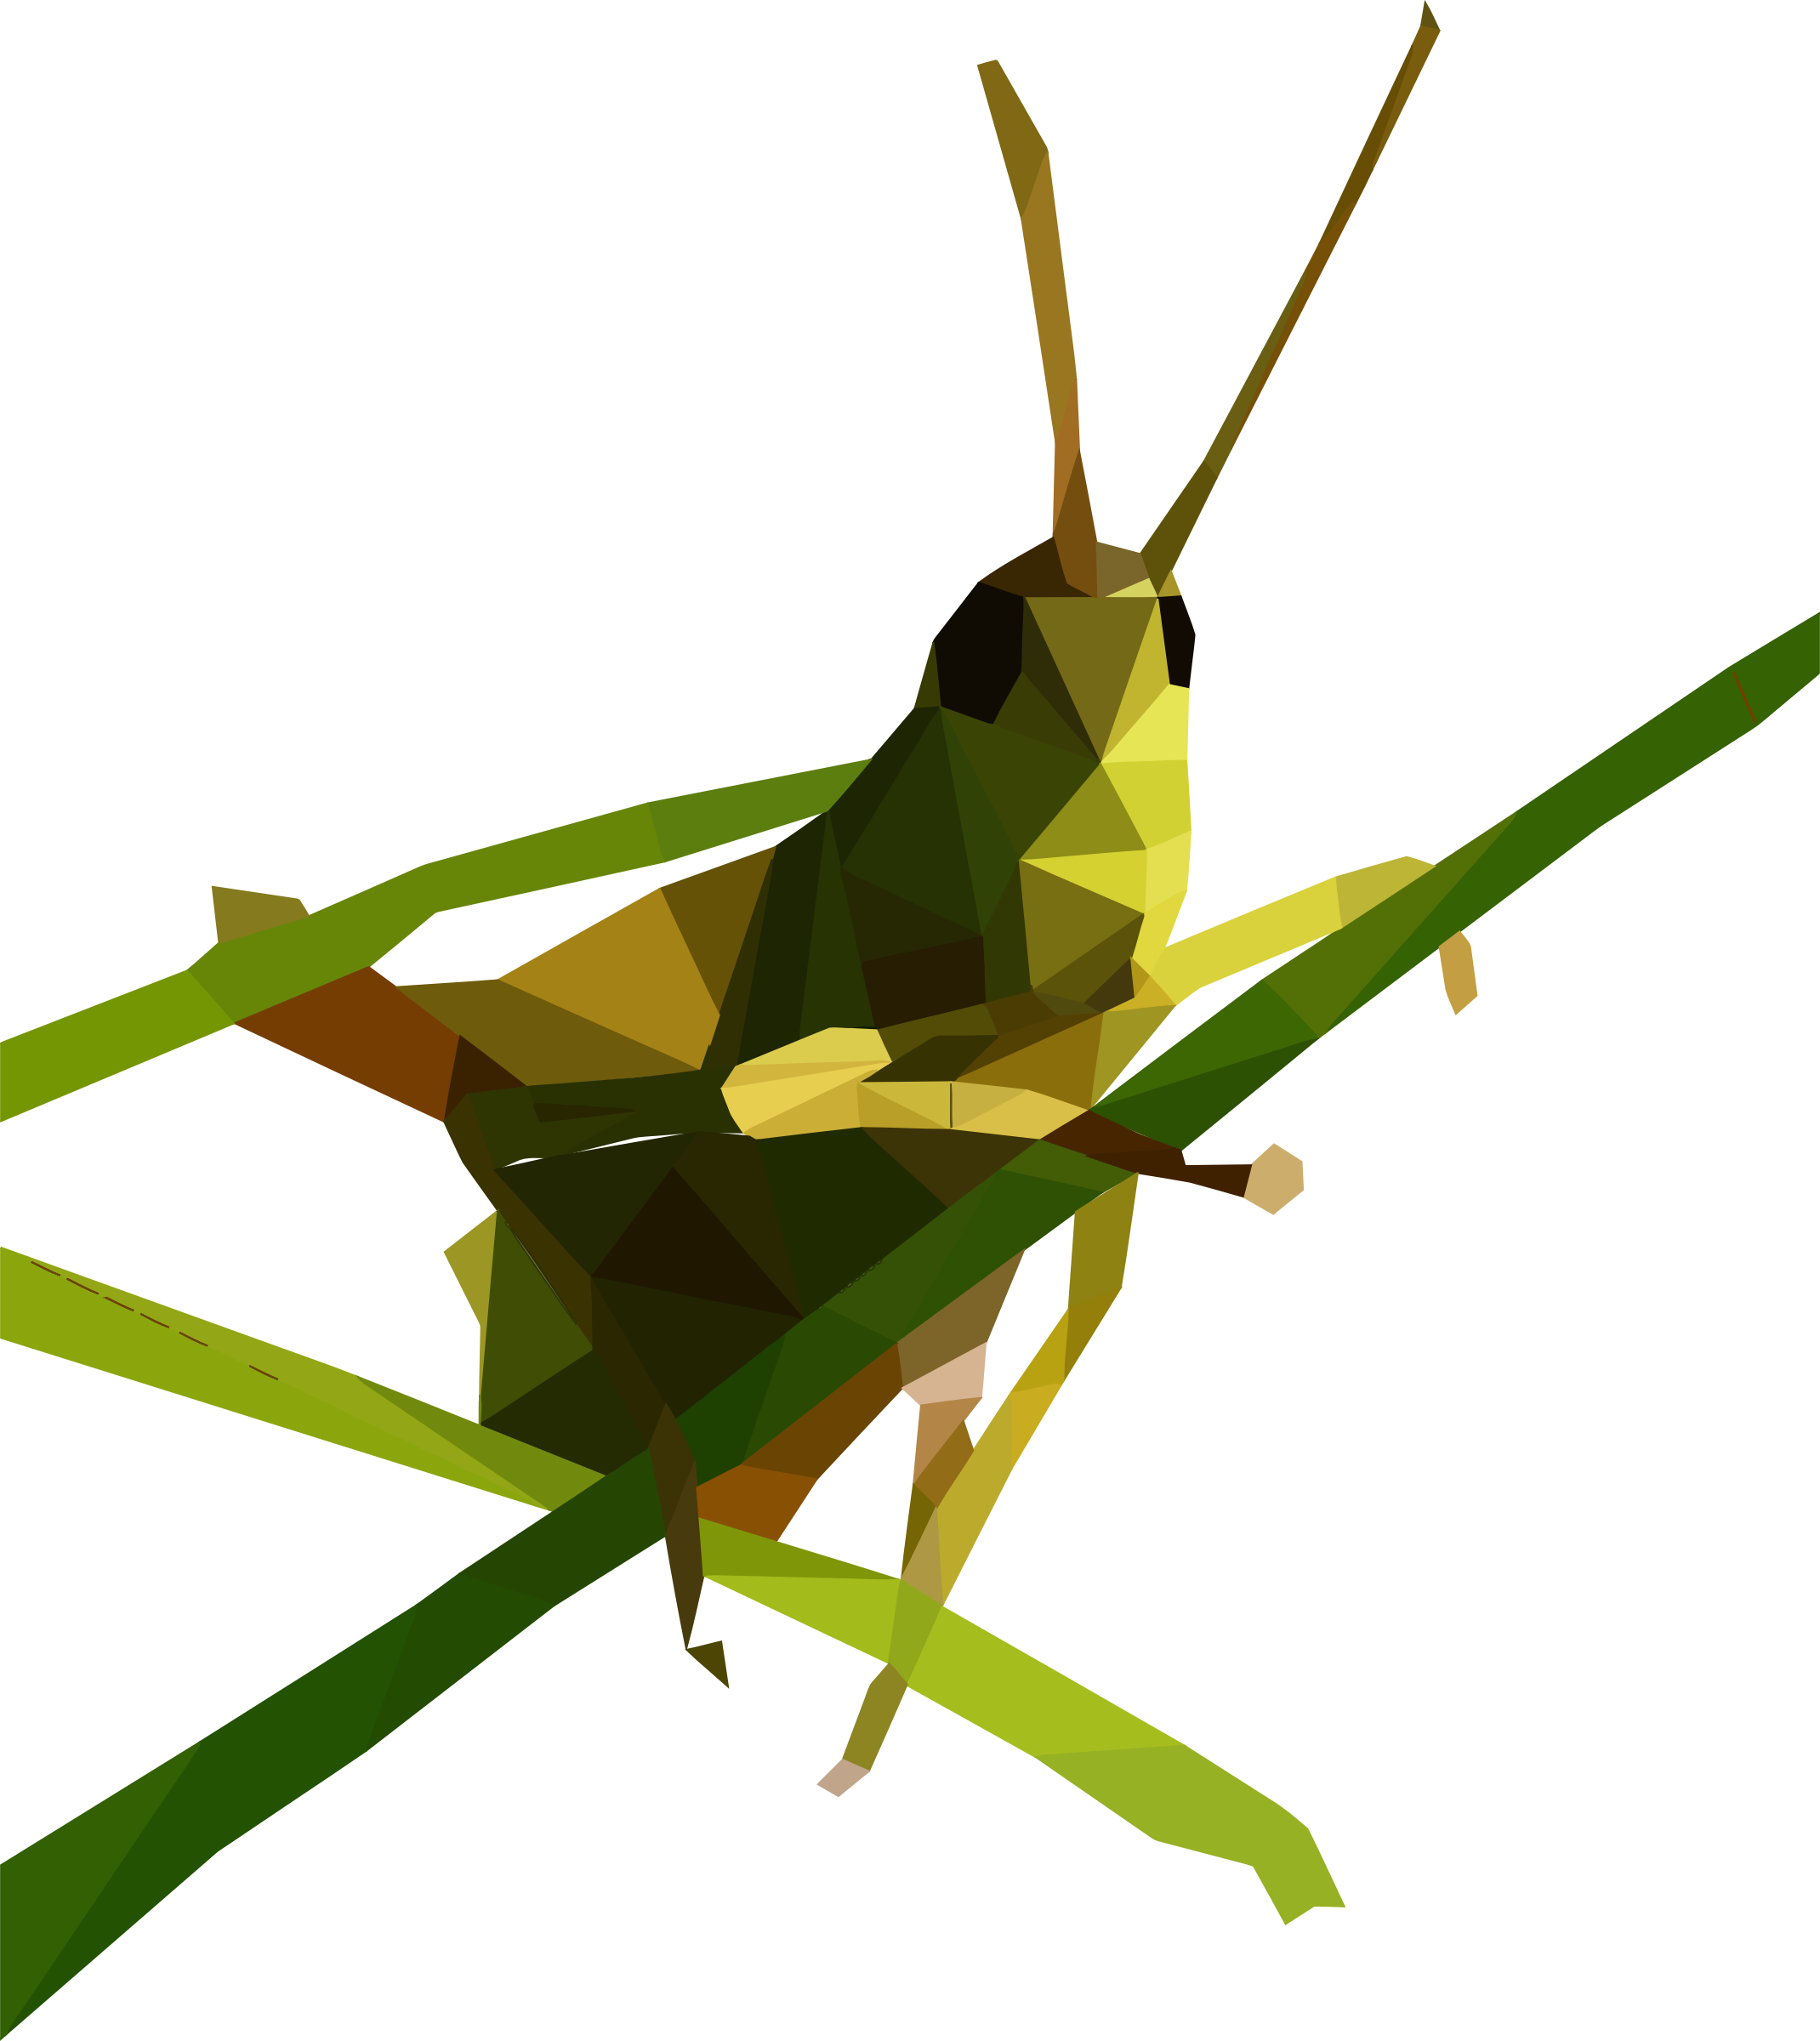 Grasshopper Free Download PNG Image